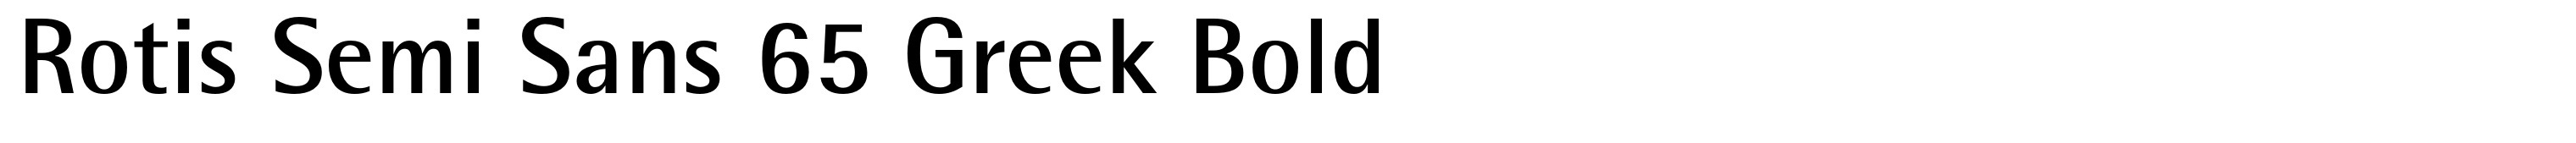 Rotis Semi Sans 65 Greek Bold